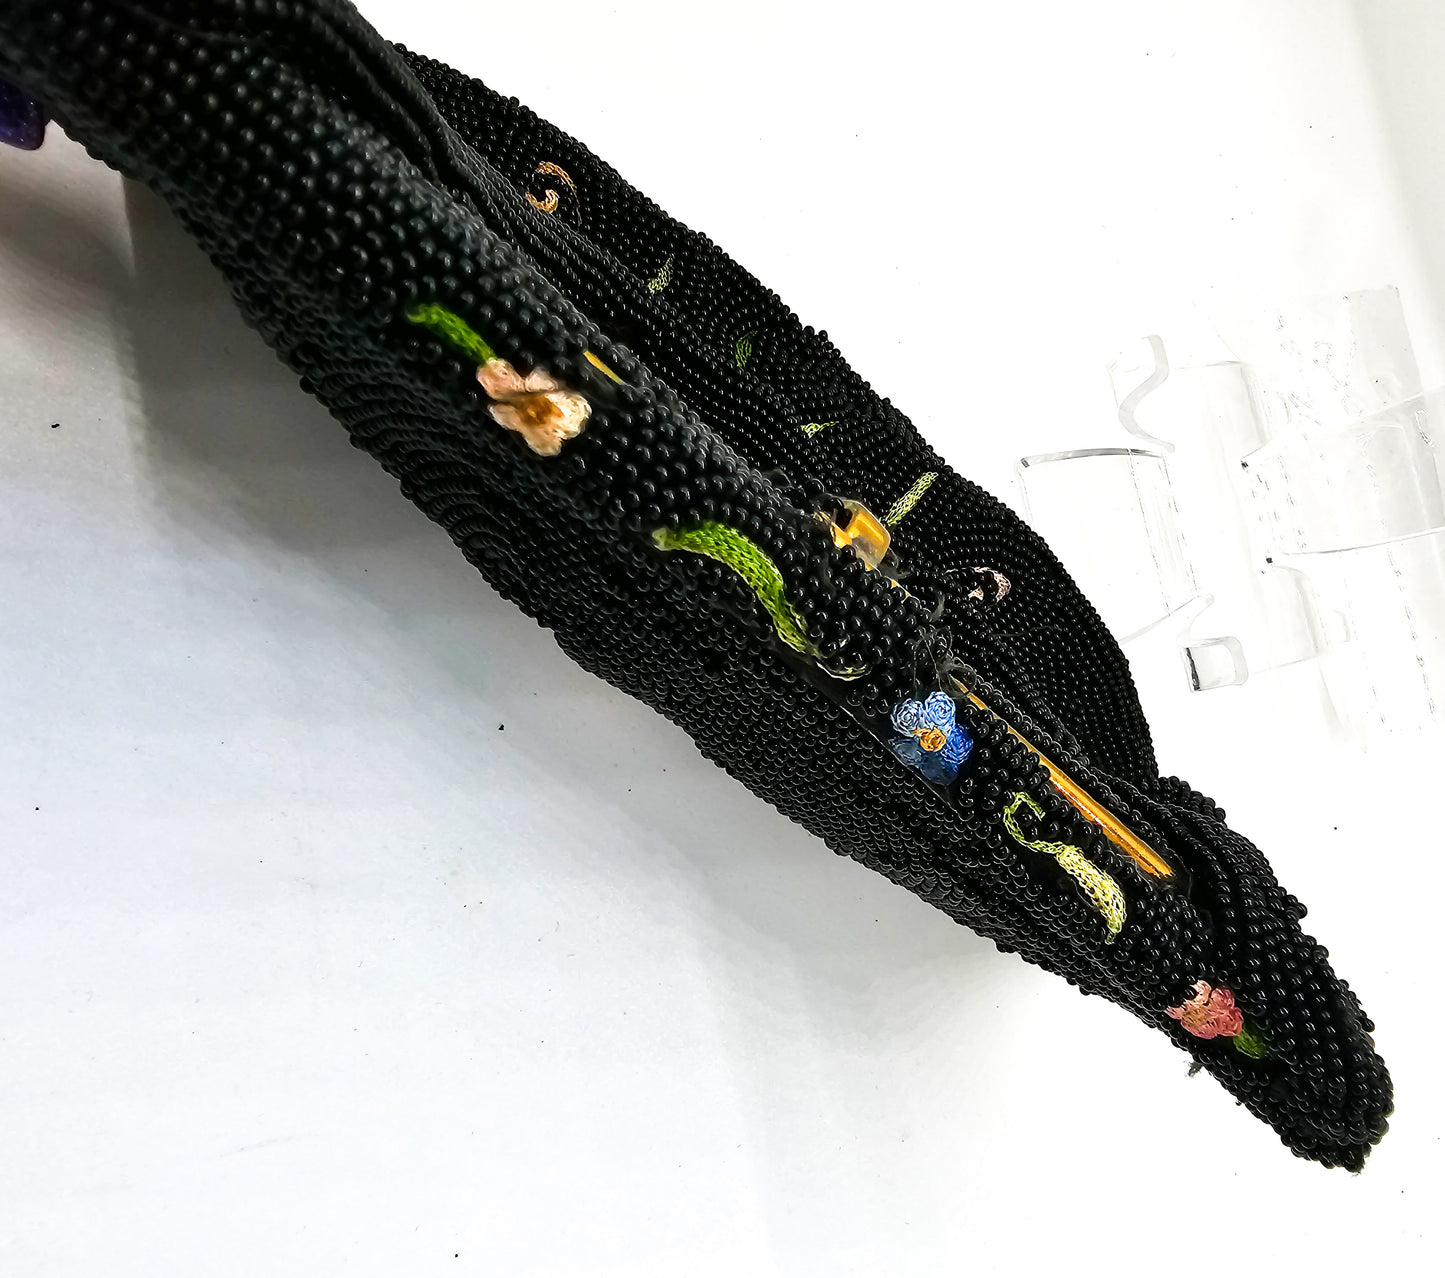 Tambour embroidered Belgium black beaded flower clutch purse